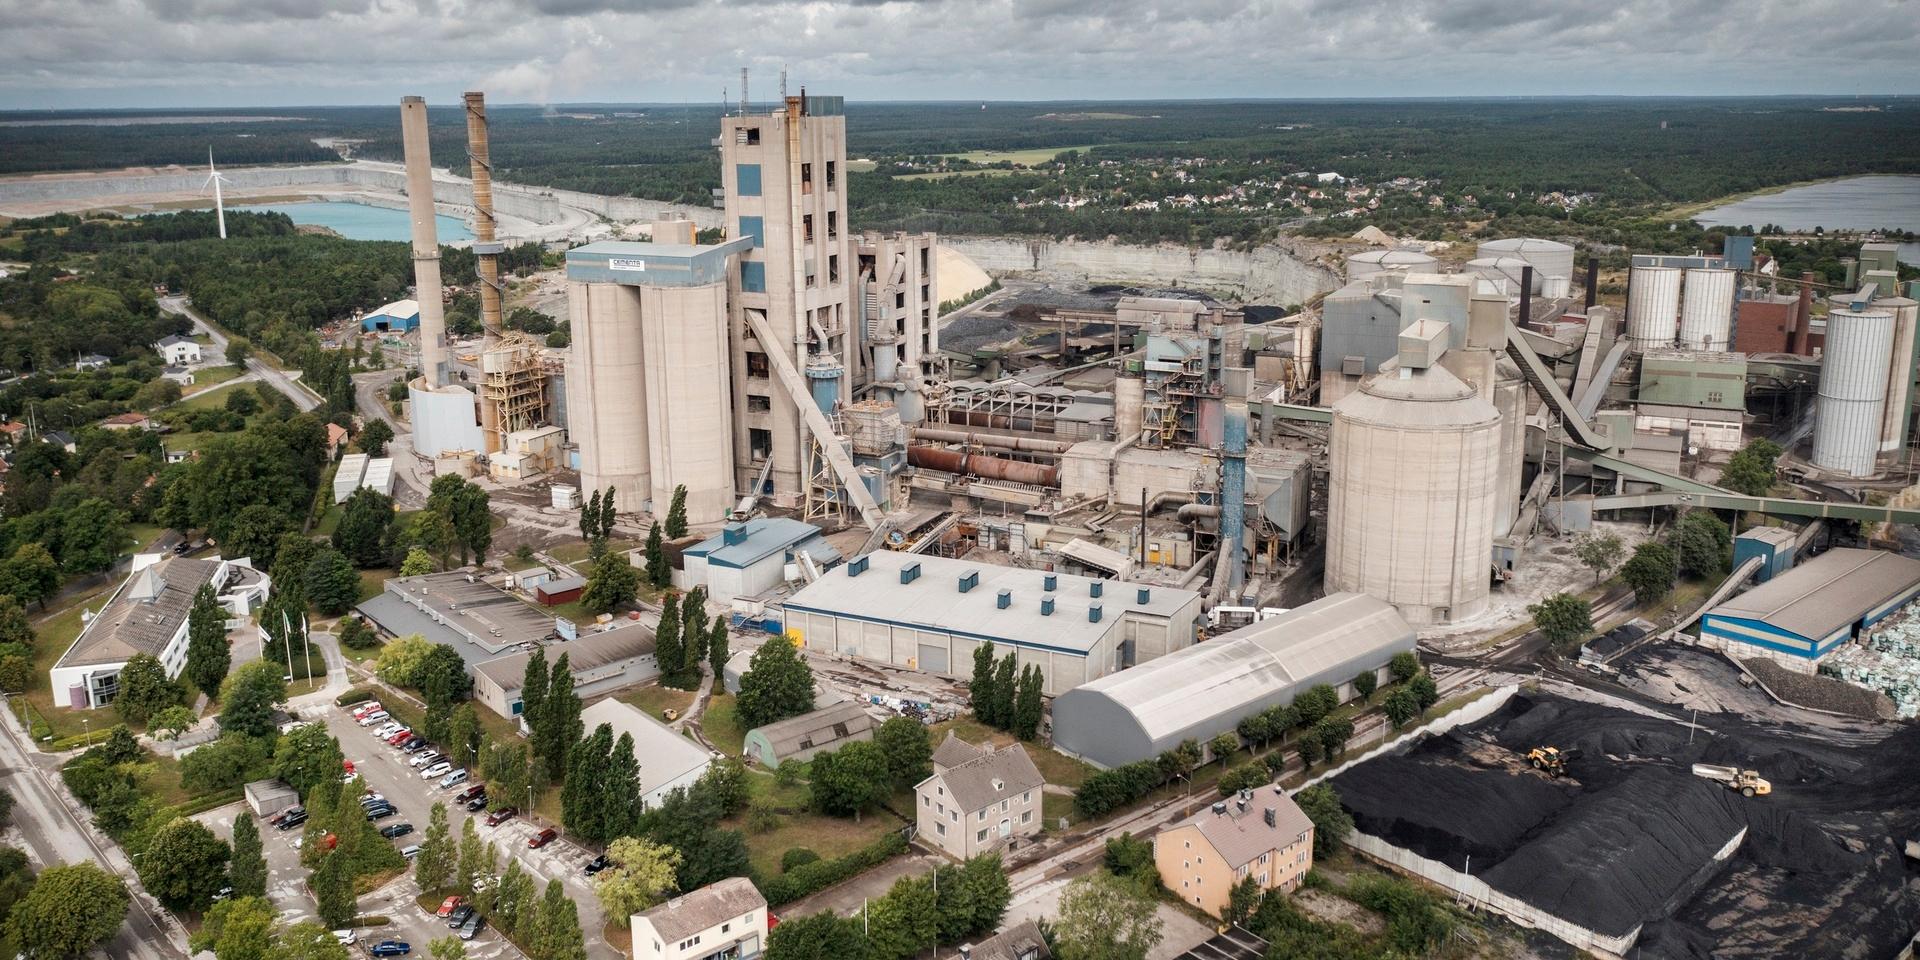 Cementas fabrik i Slite på Gotland. Arkivbild.